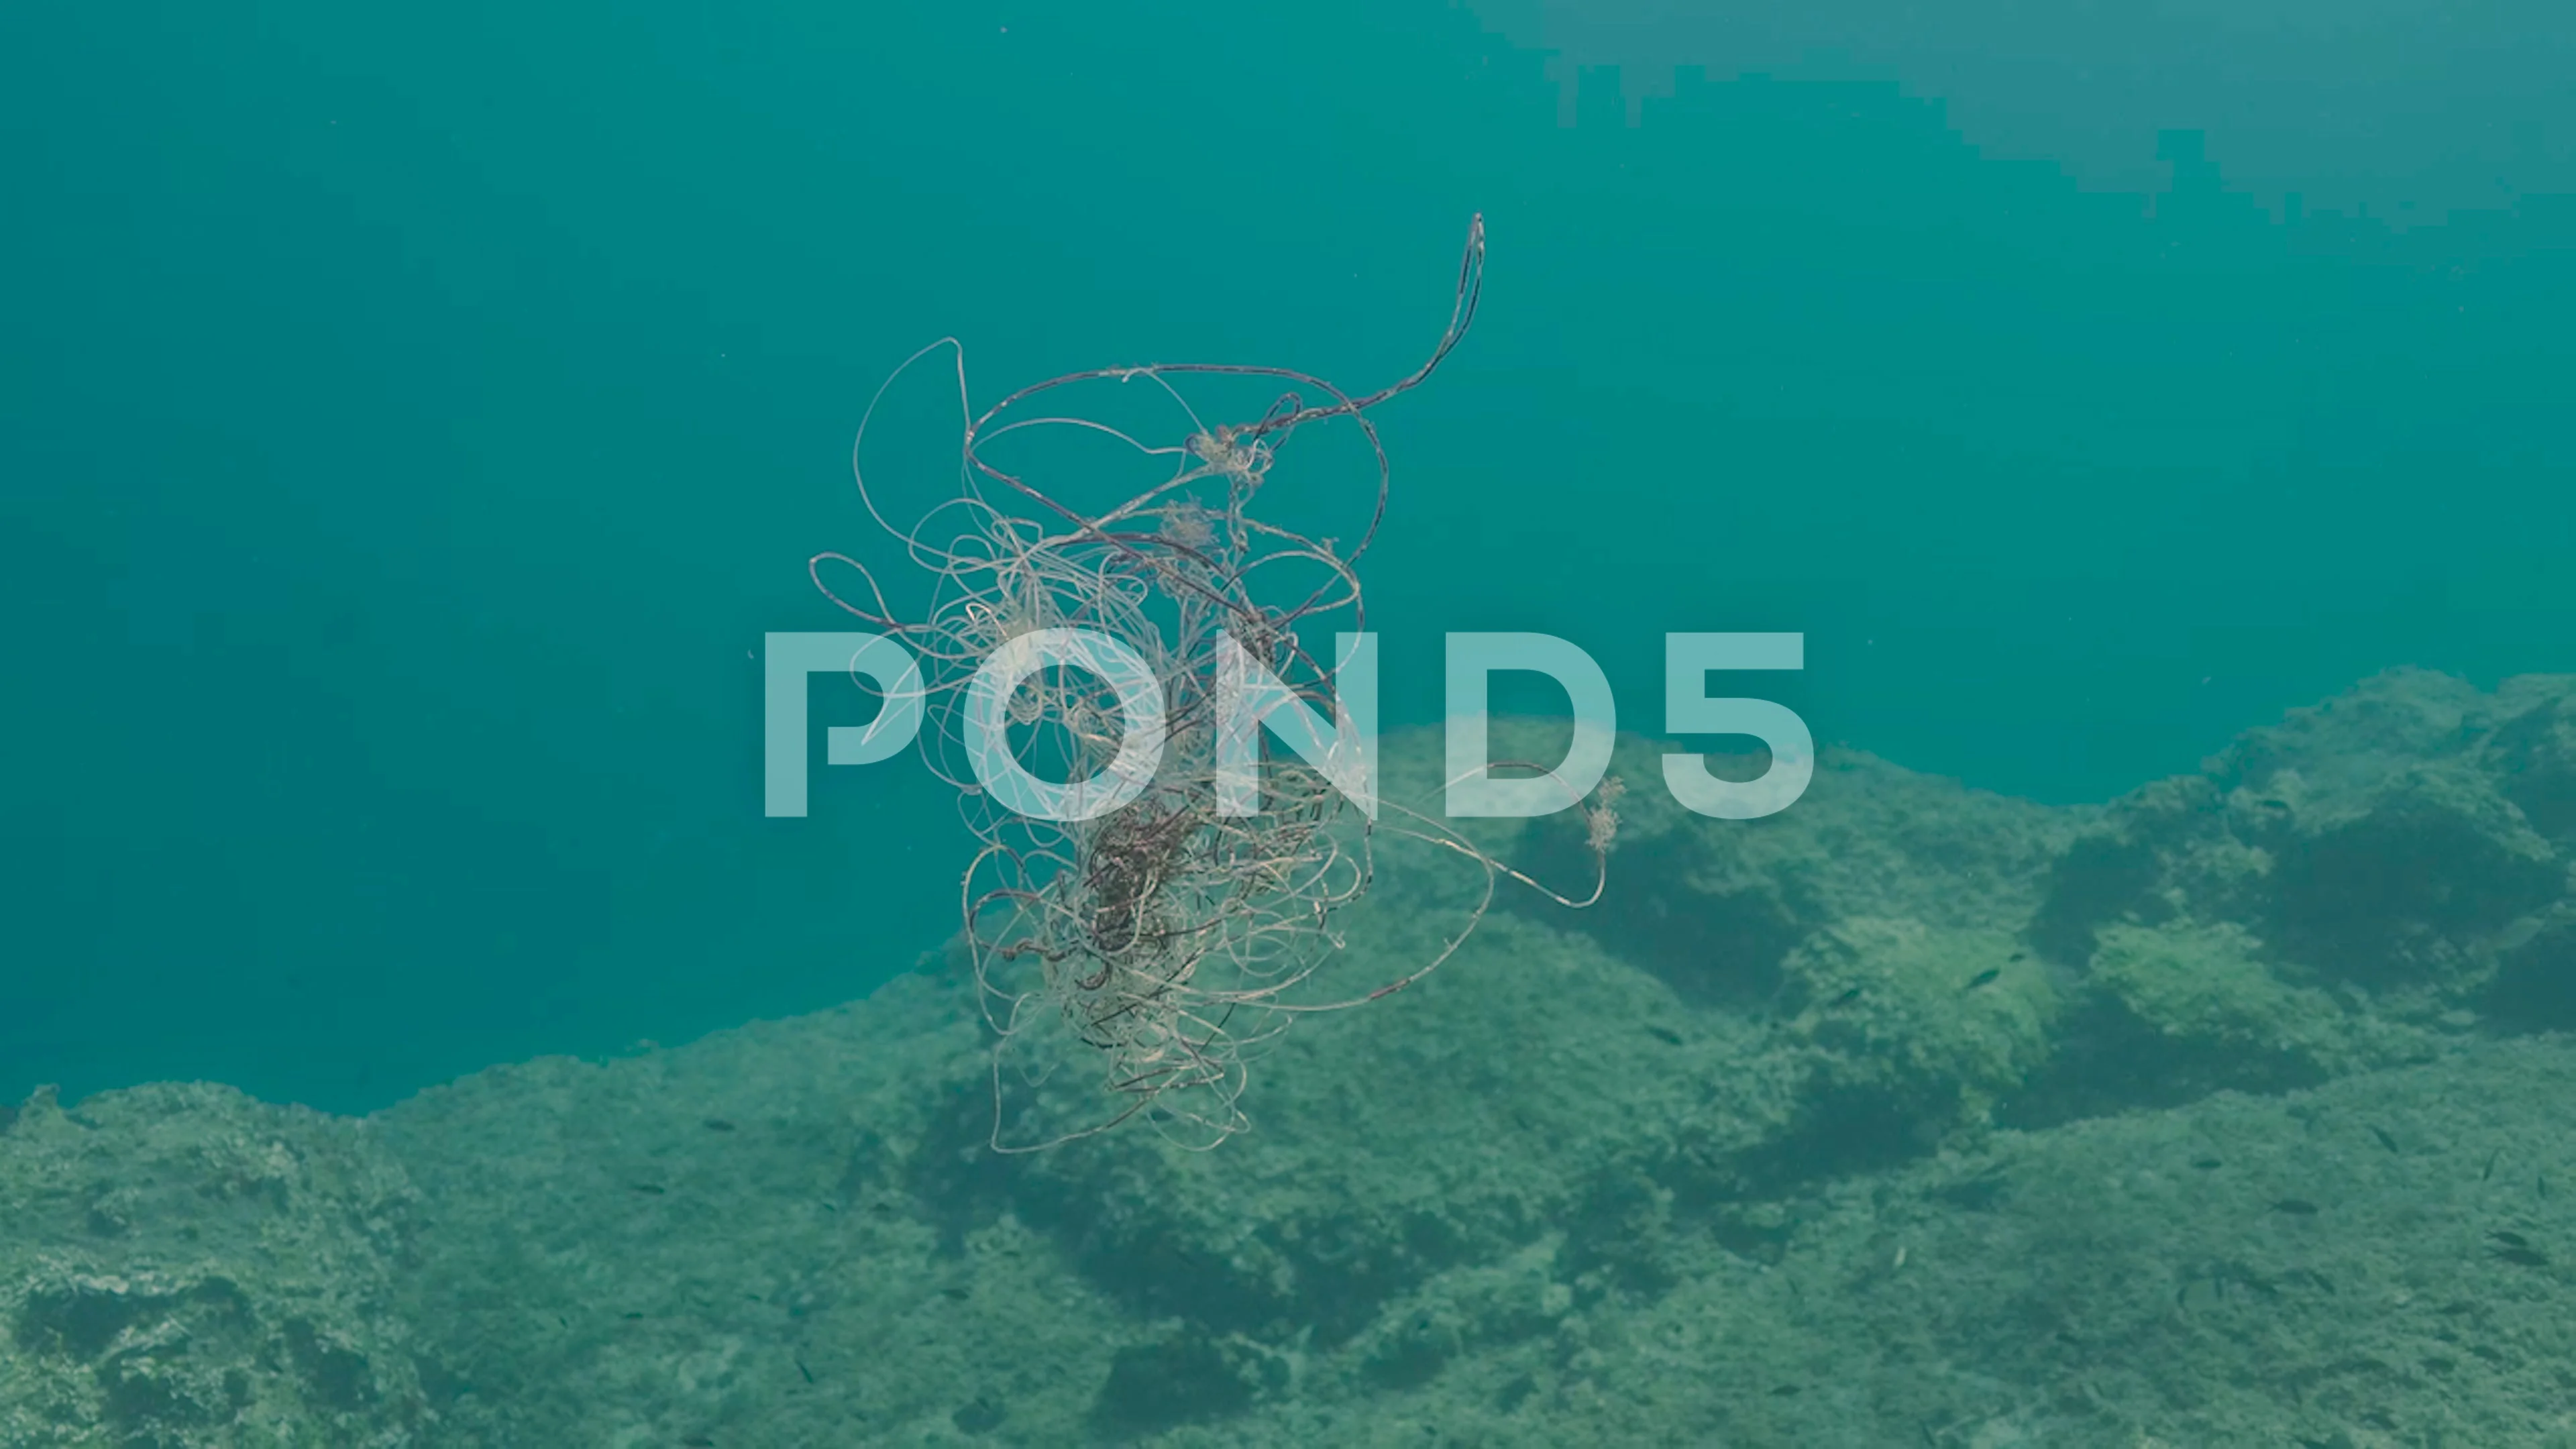 underwater fishing line floats like tras, Stock Video